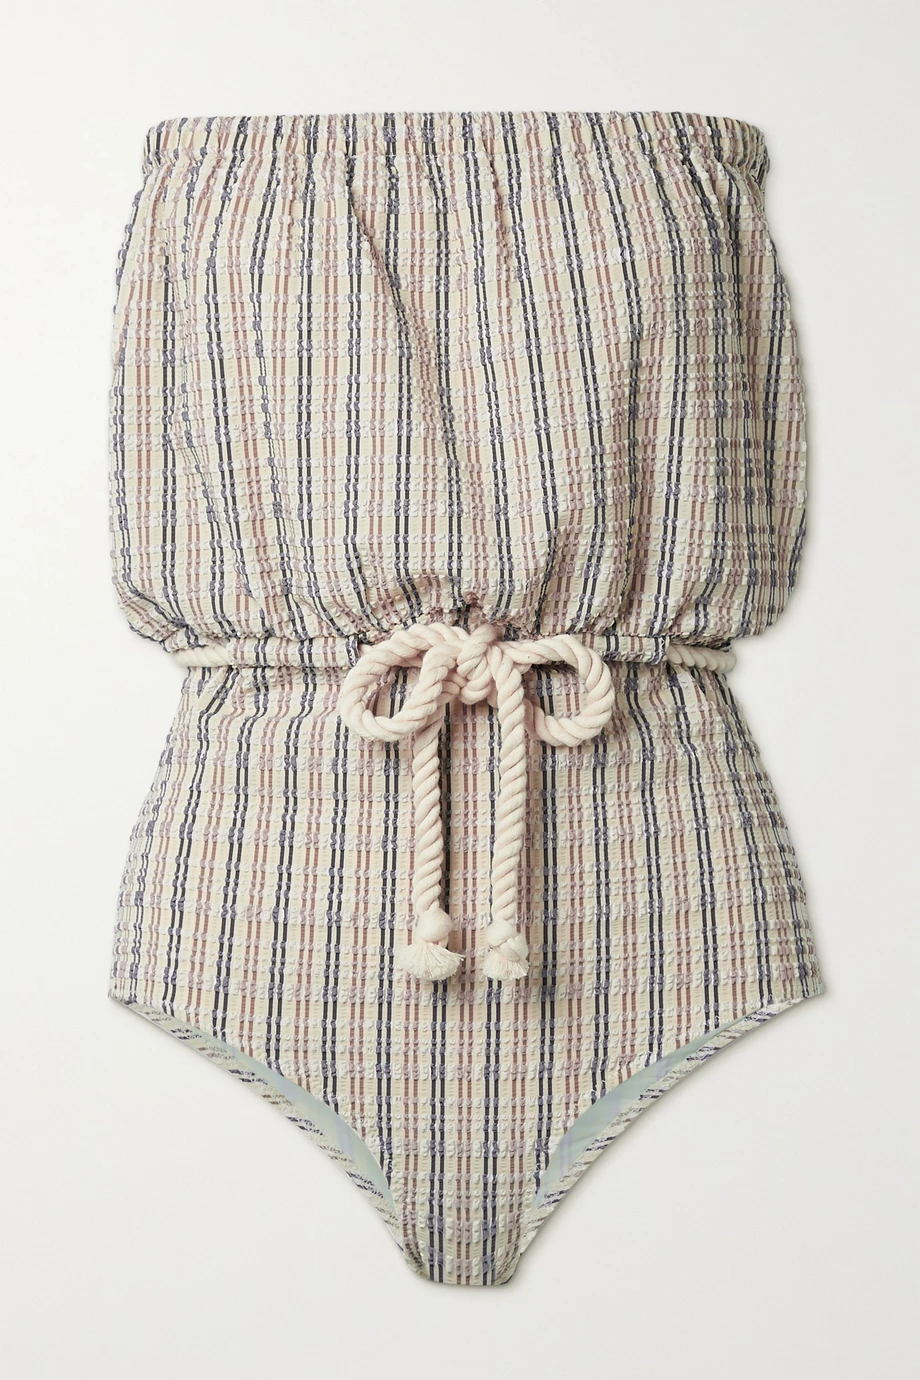 marie fernandez onepiece net sustain victor strapless rope detailed striped seersucker swimsuit